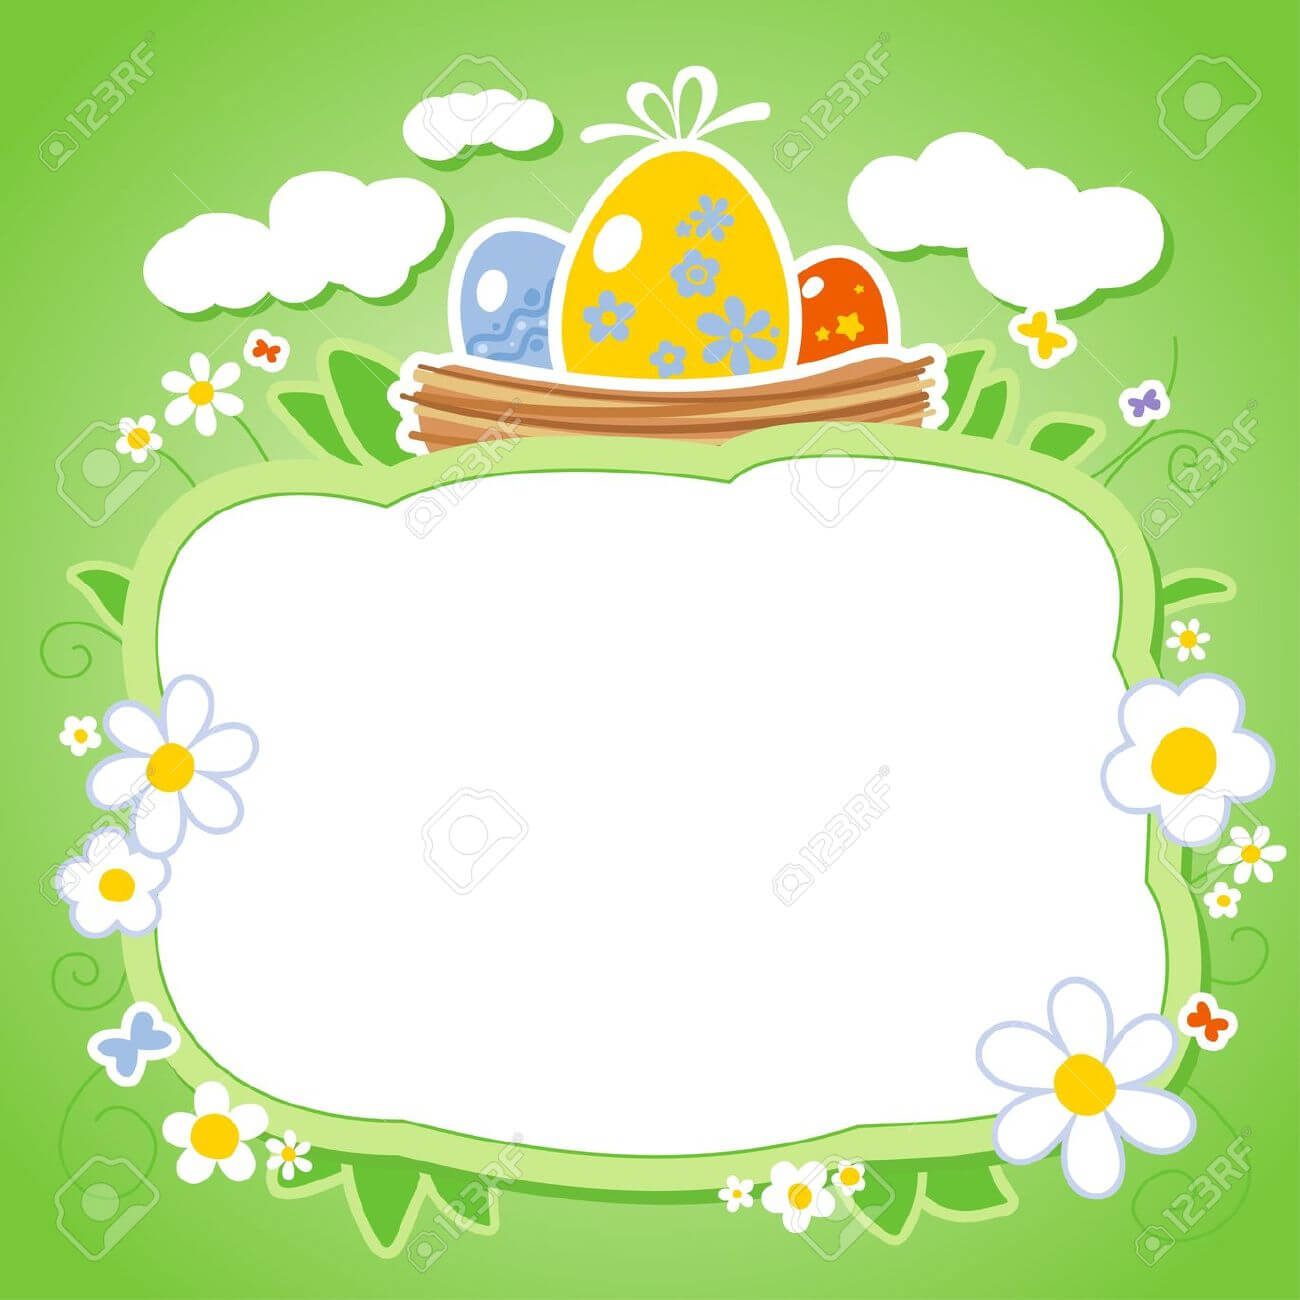 Easter Card Designs Ks2 Easter Card Template Design Easter Intended For Easter Card Template Ks2